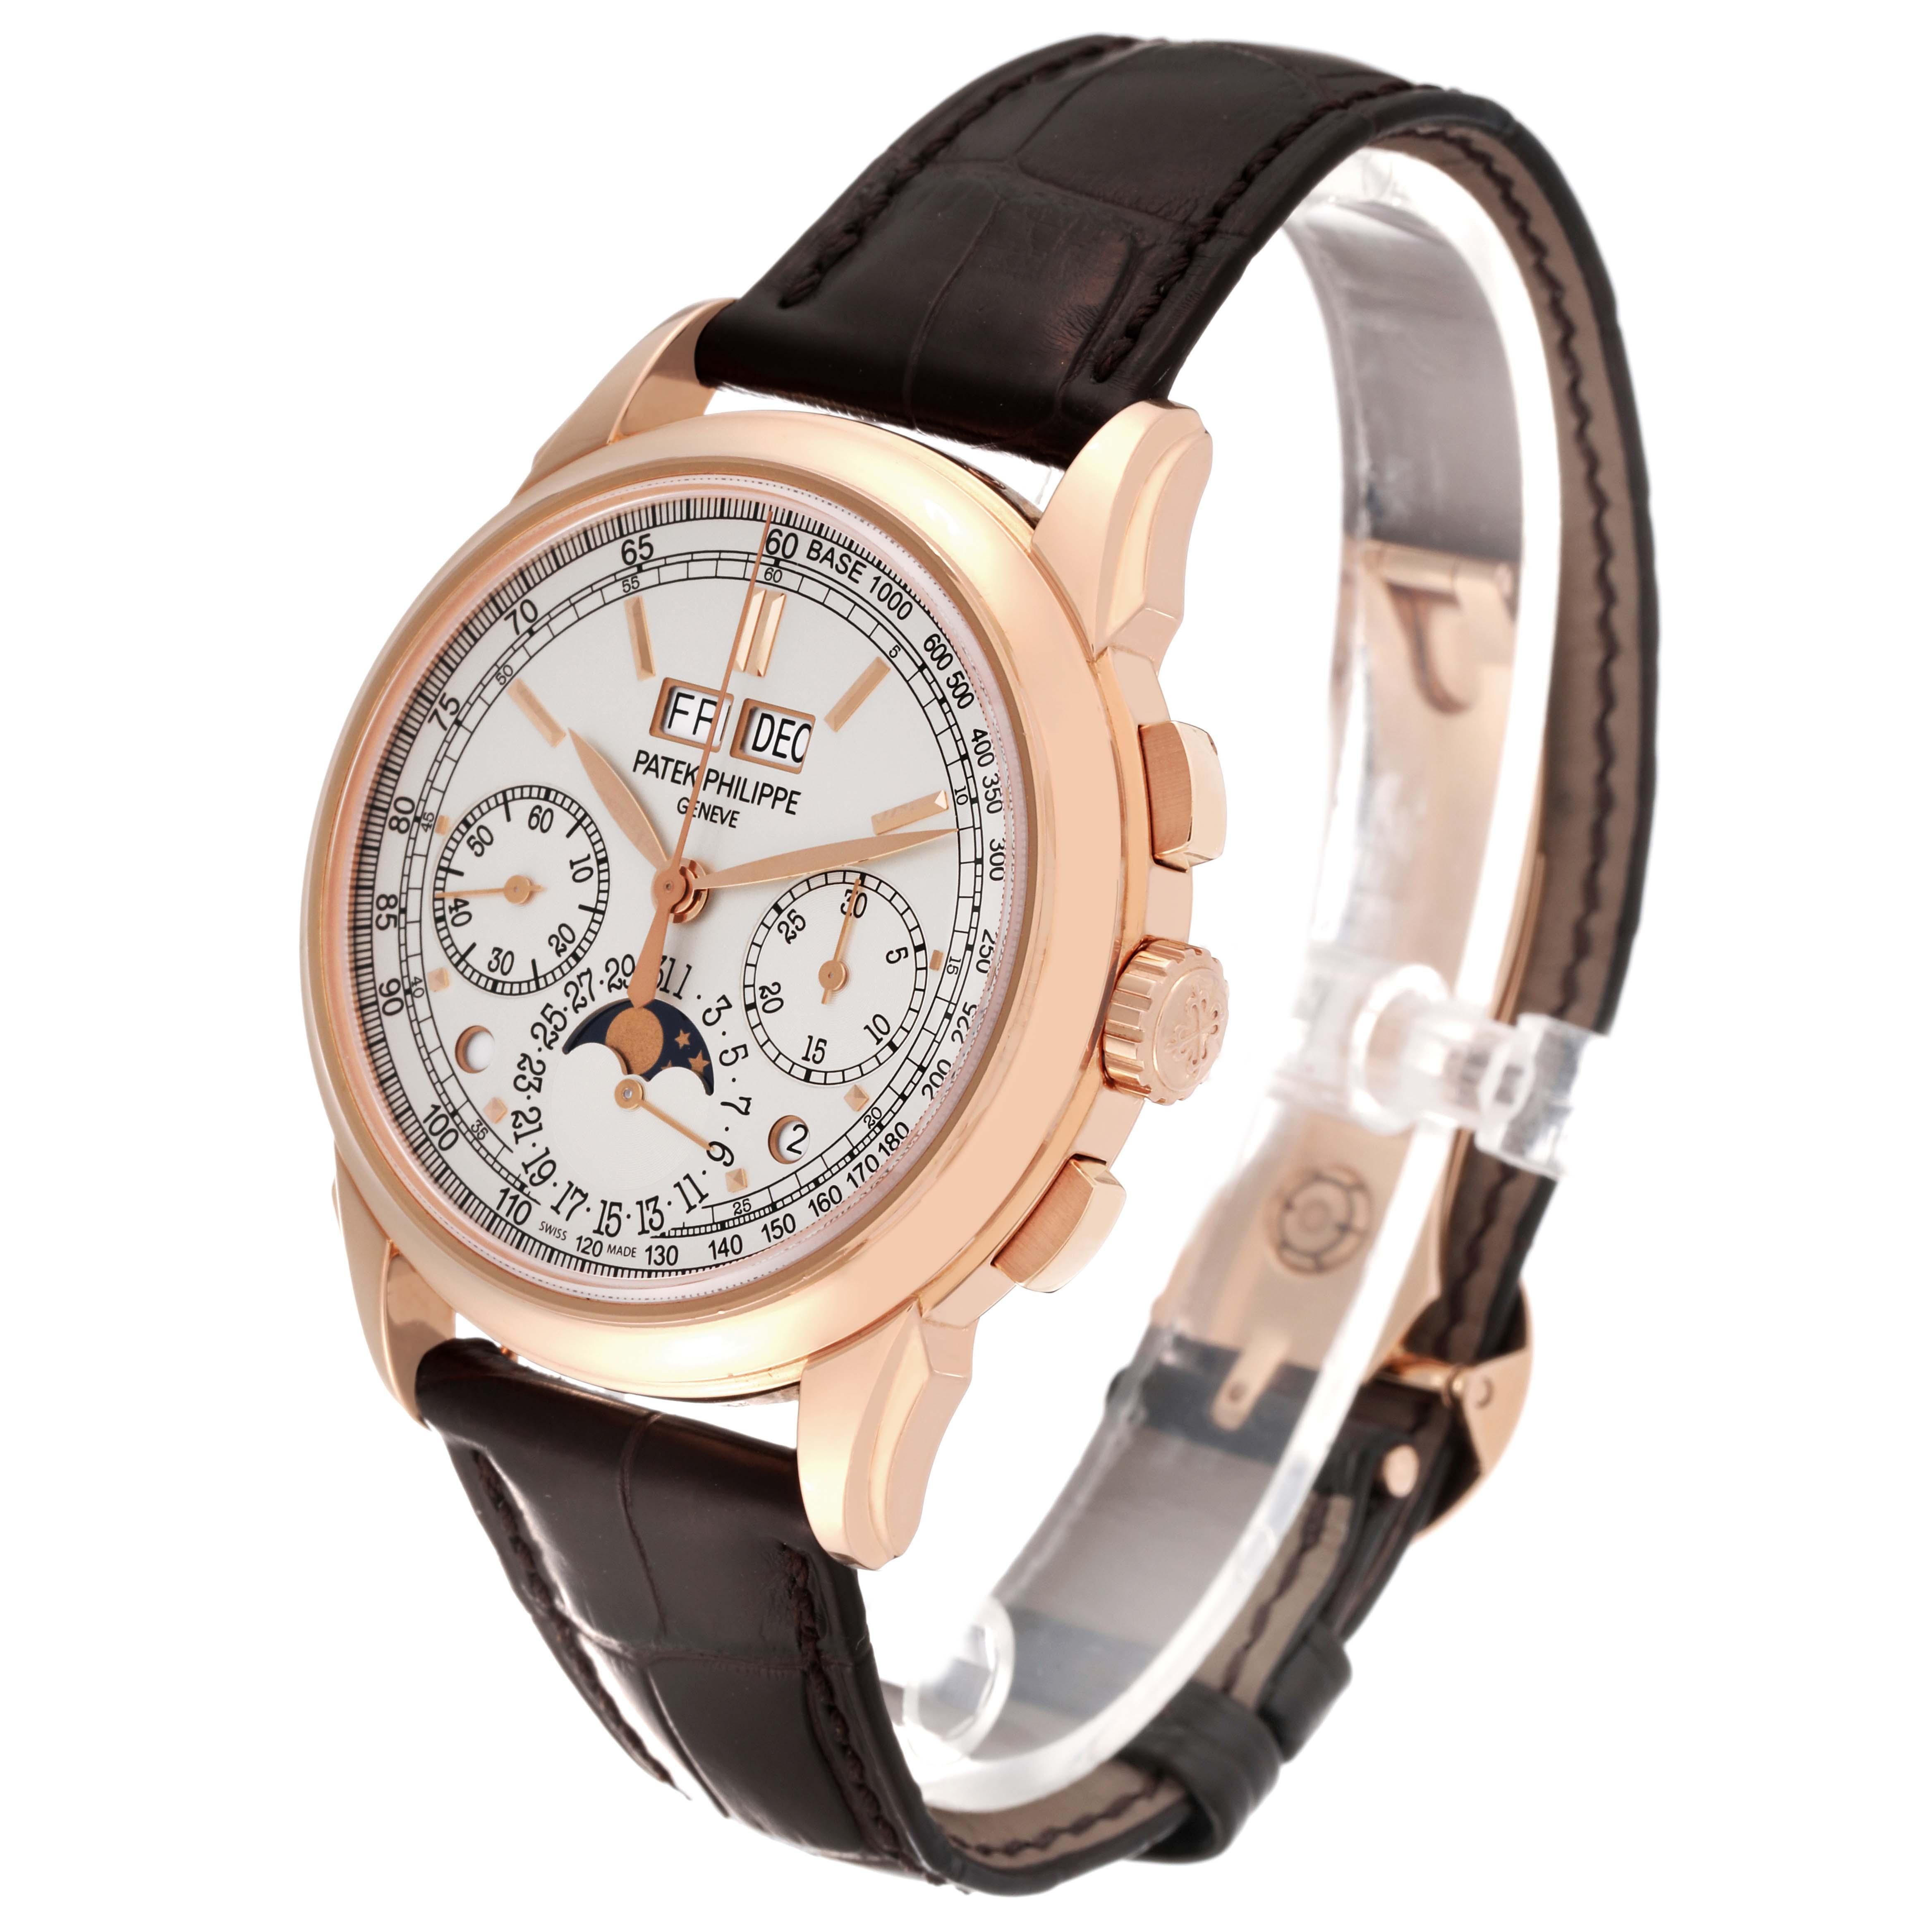 Patek Philippe Grand Complications Perpetual Calendar Rose Gold Watch 5270 For Sale 1